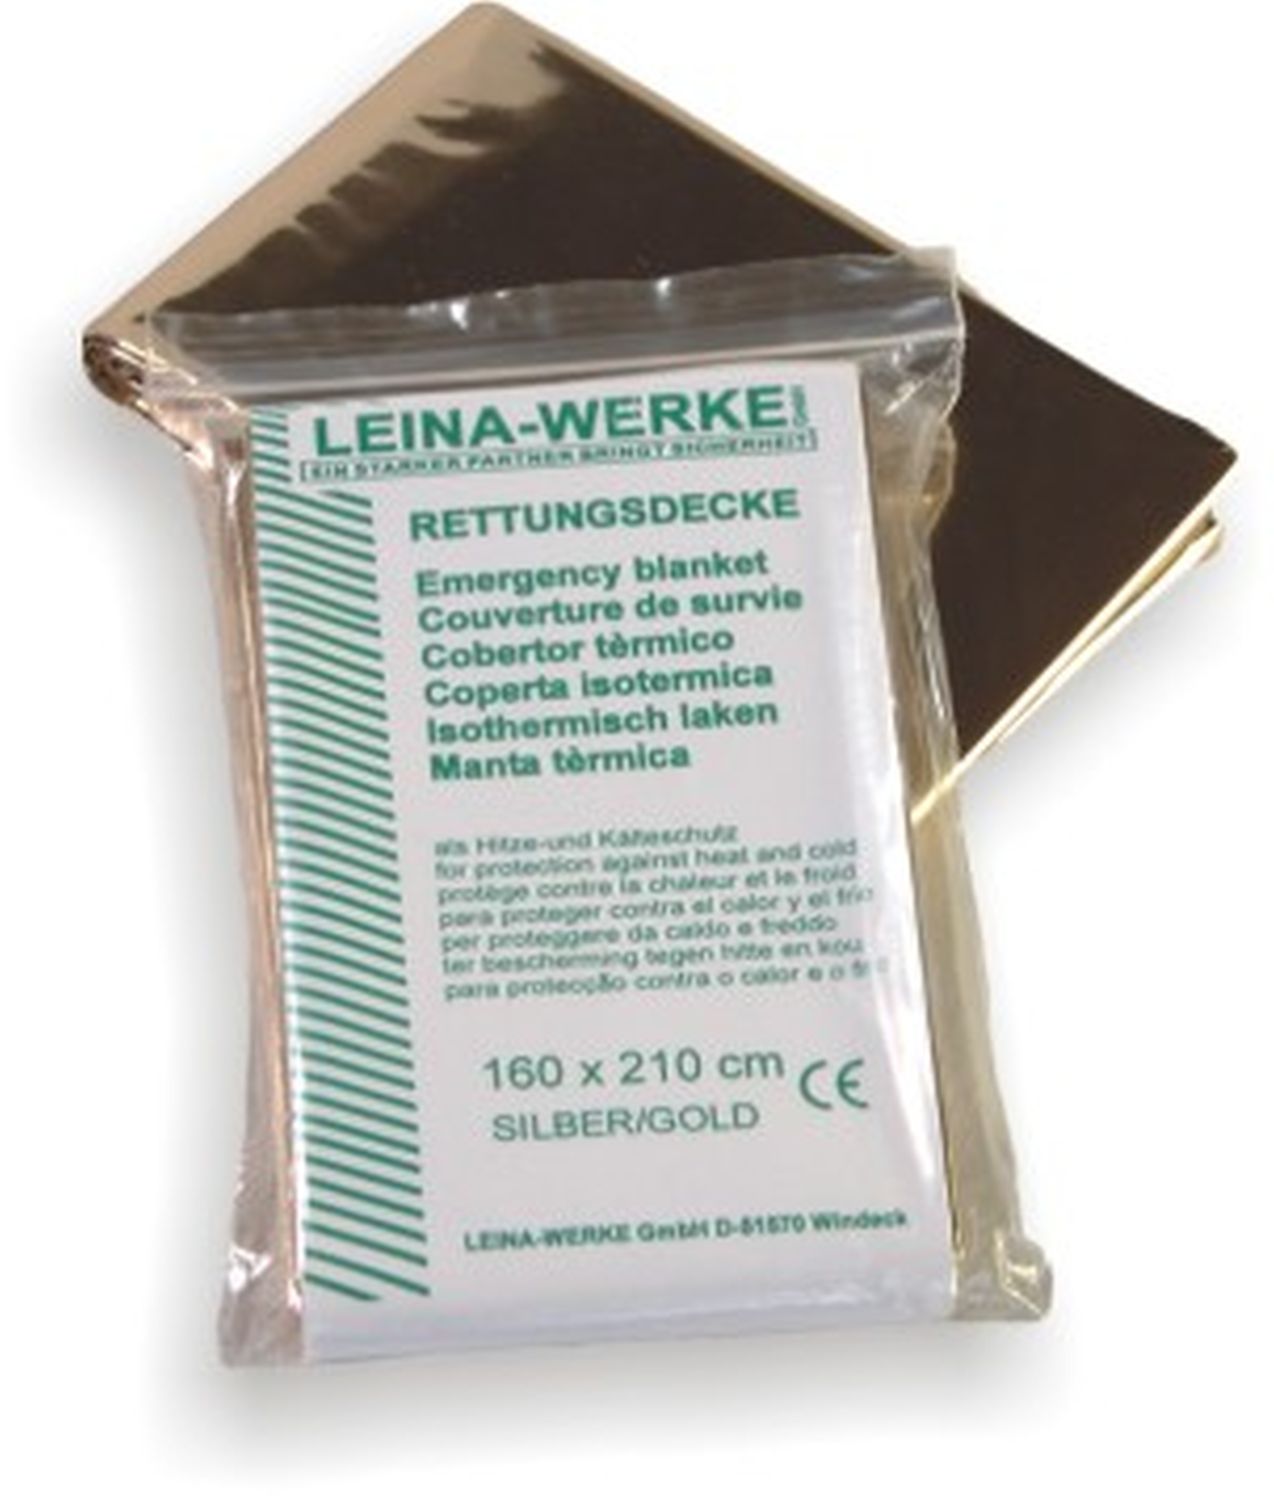 Rettungsdecke Leina-Werke 43000 160 x 210 cm, silber/gold